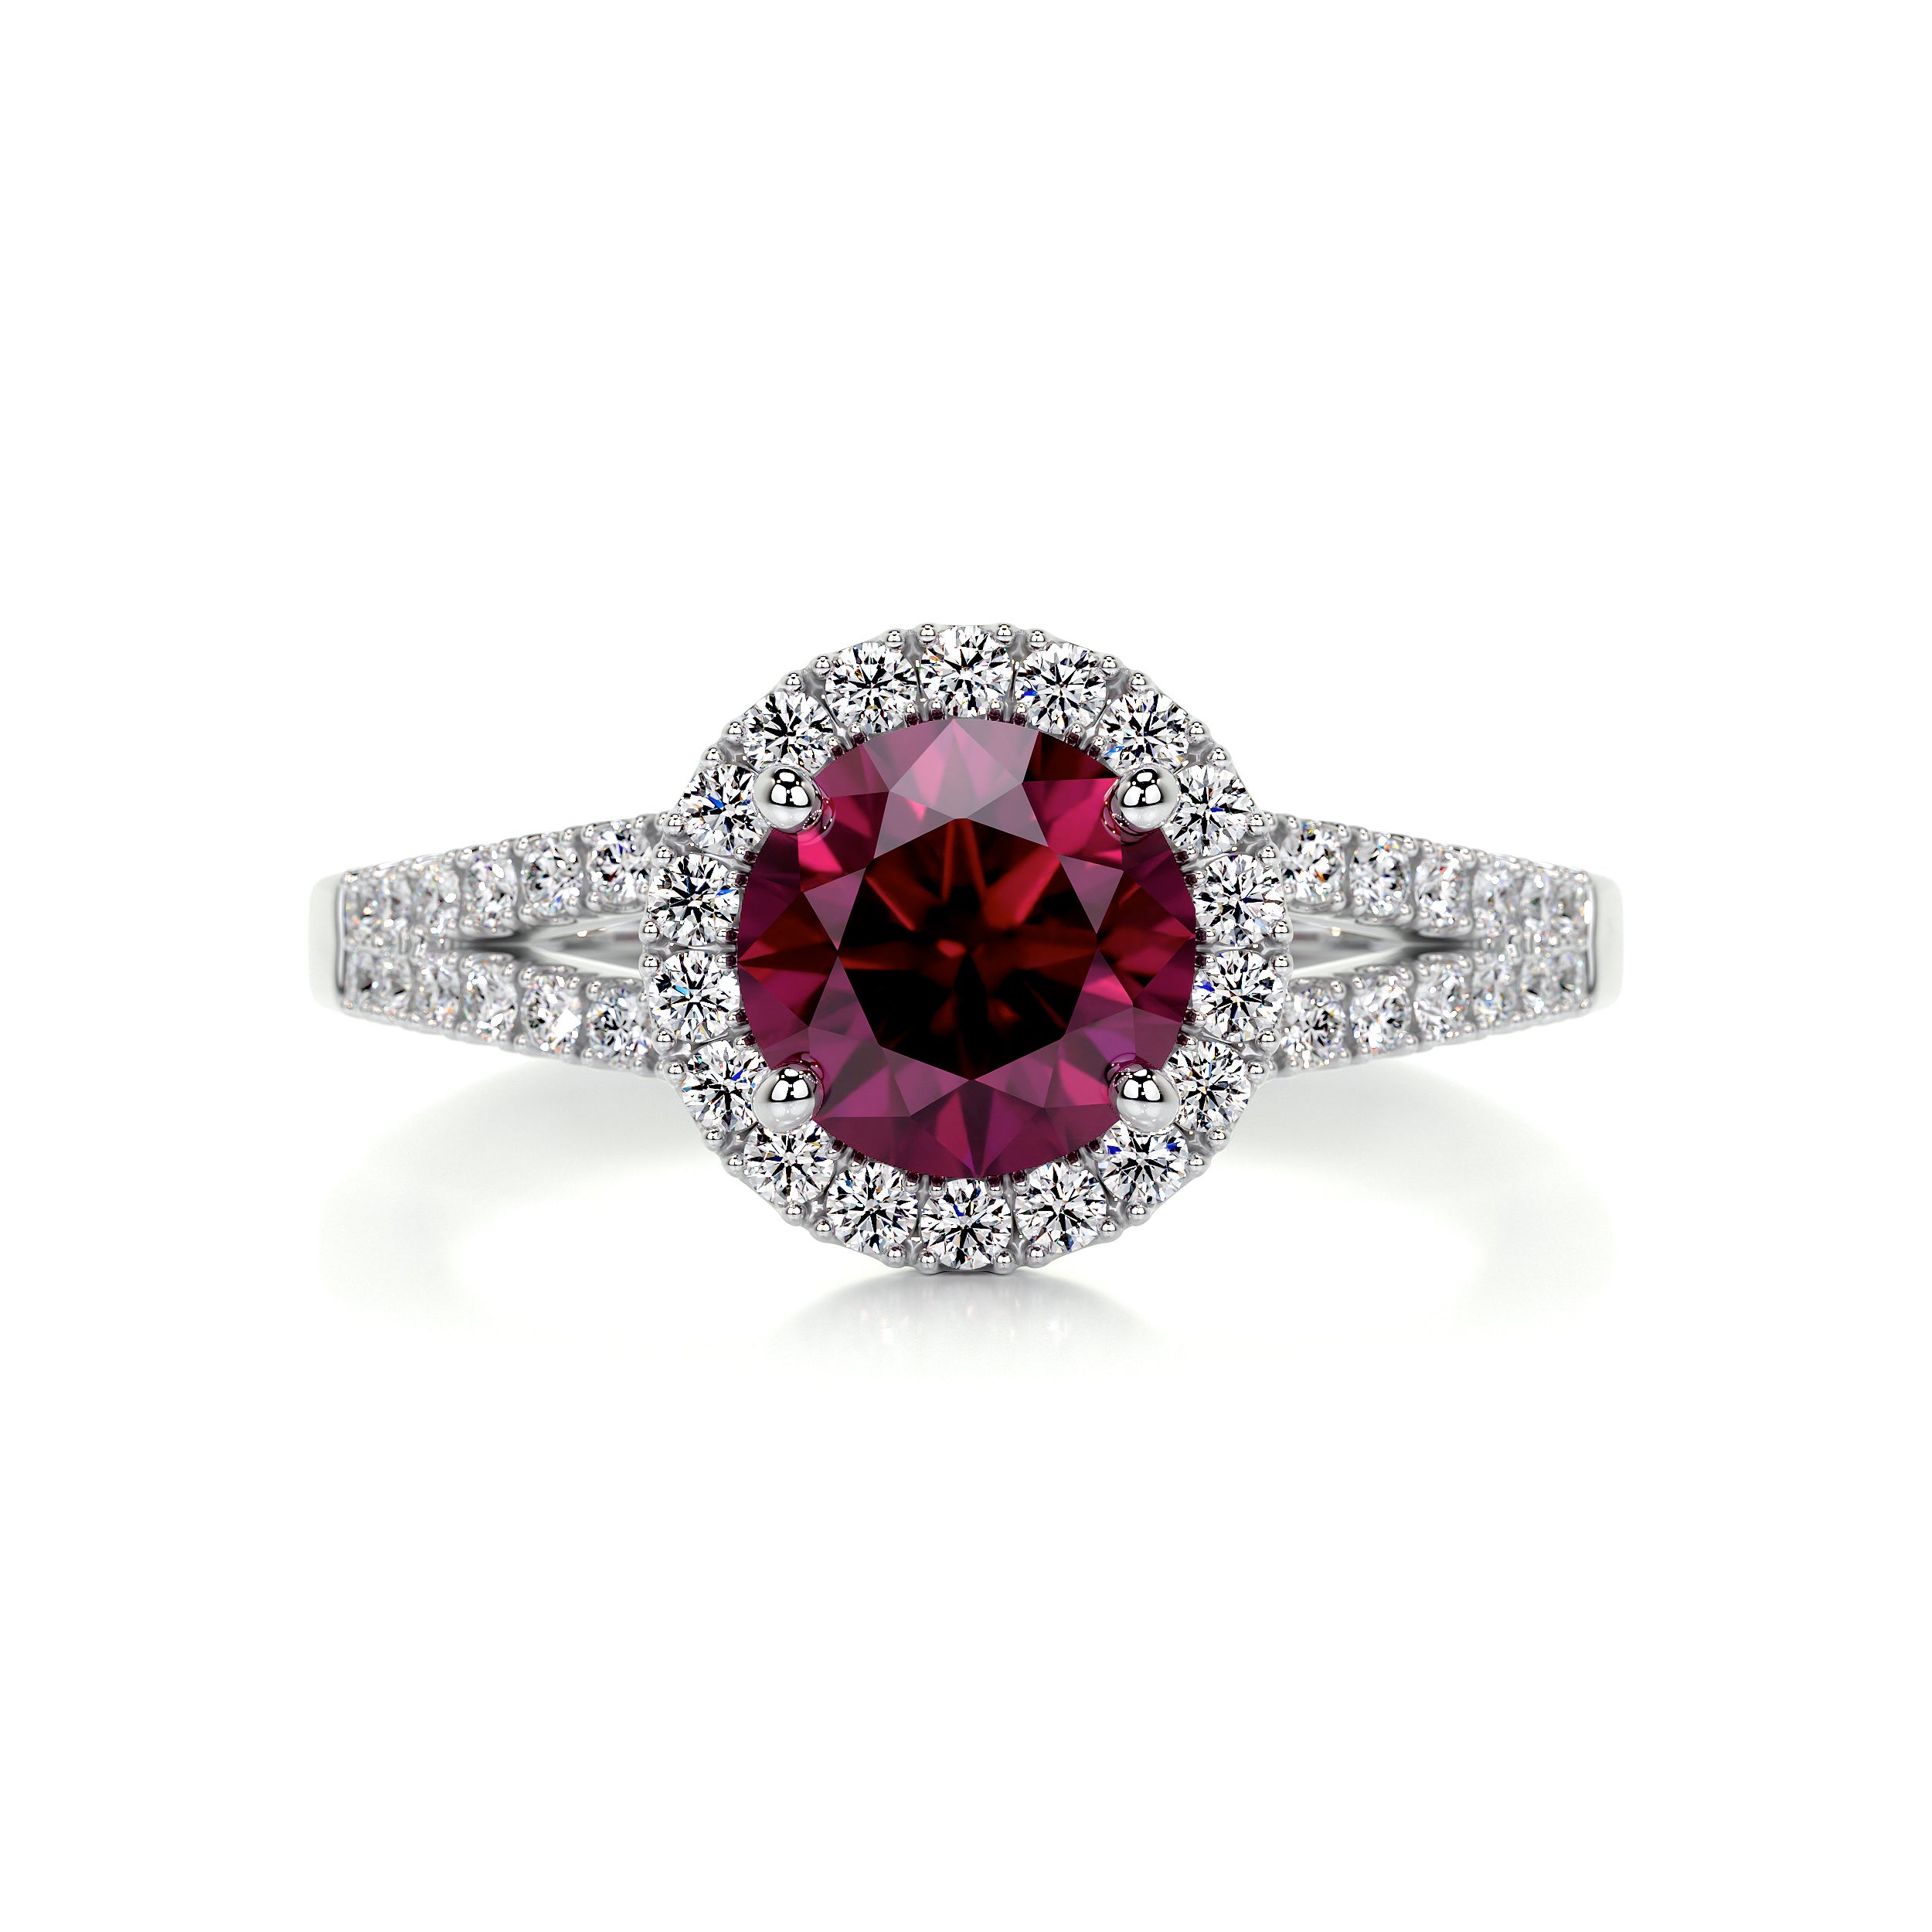 Hazel Gemstone & Diamonds Ring   (1.25 Carat) -Platinum